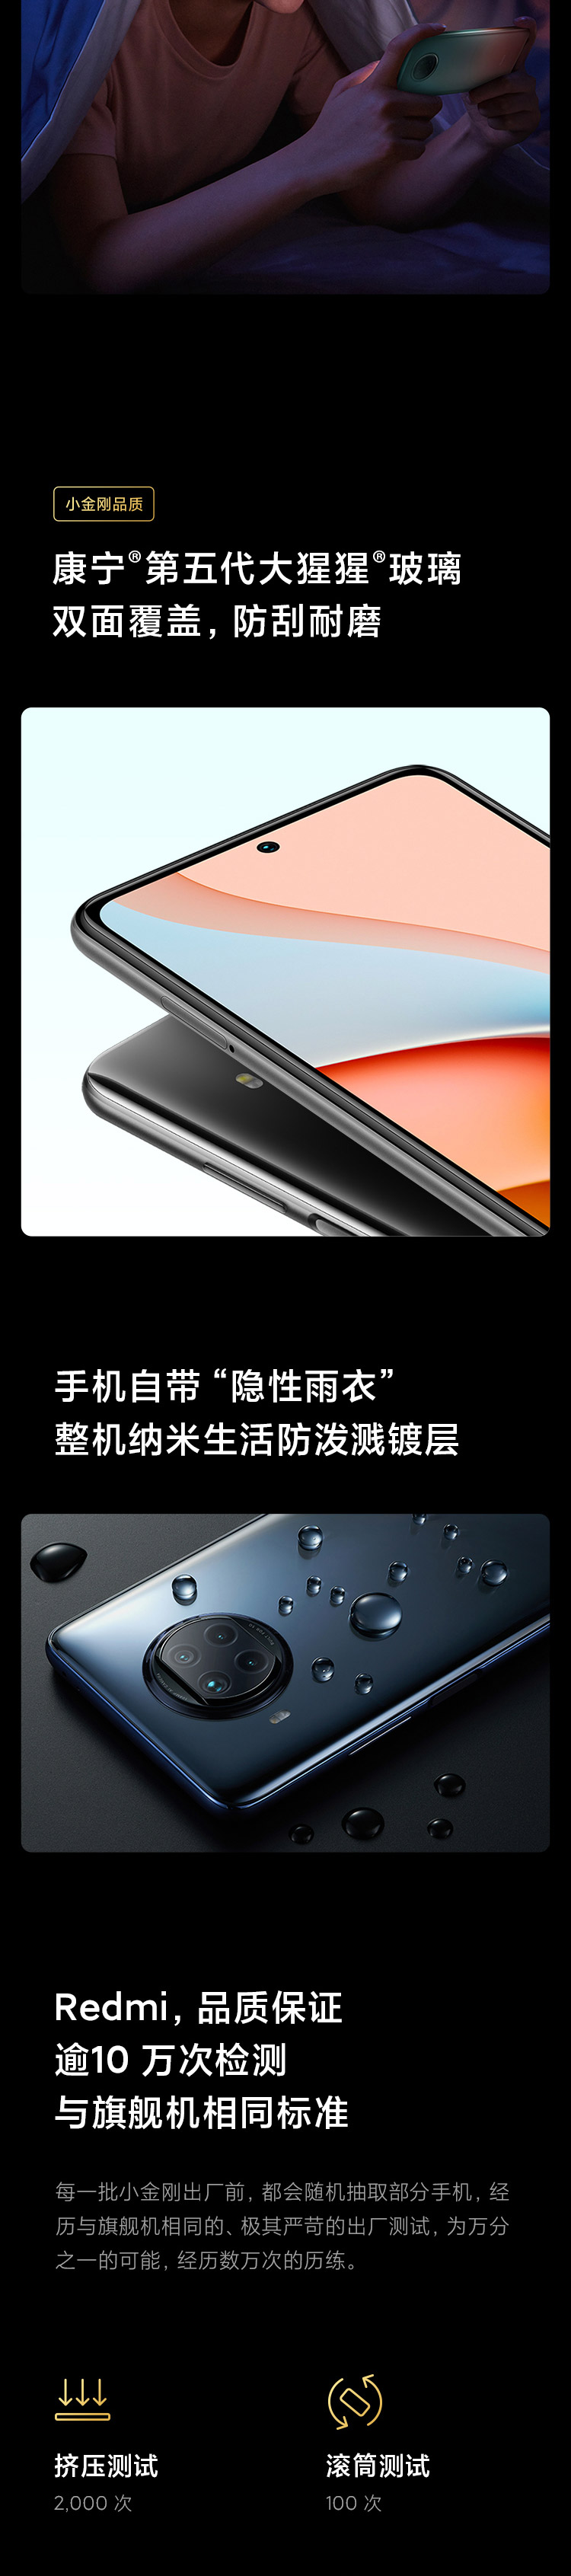 Redmi Note 9 Pro 5G 一亿像素 骁龙750G 33W快充 120Hz刷新率 碧海星辰 8GB+256GB 智能手机 小米 红米